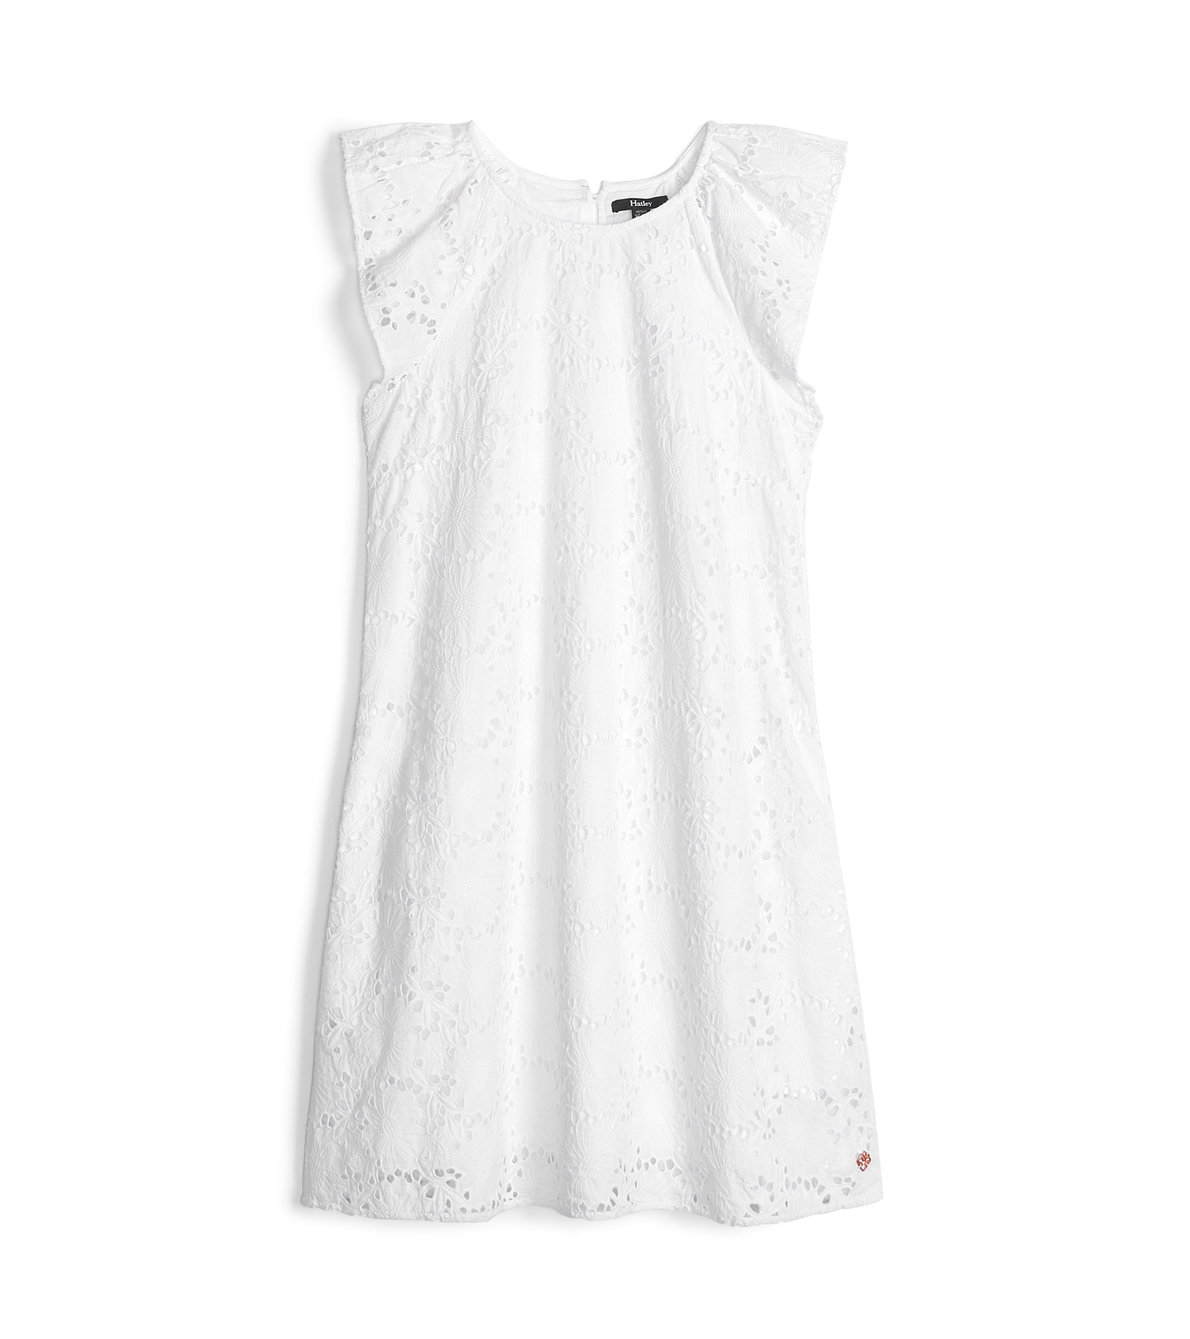 View larger image of Kaia Eyelet Dress - White